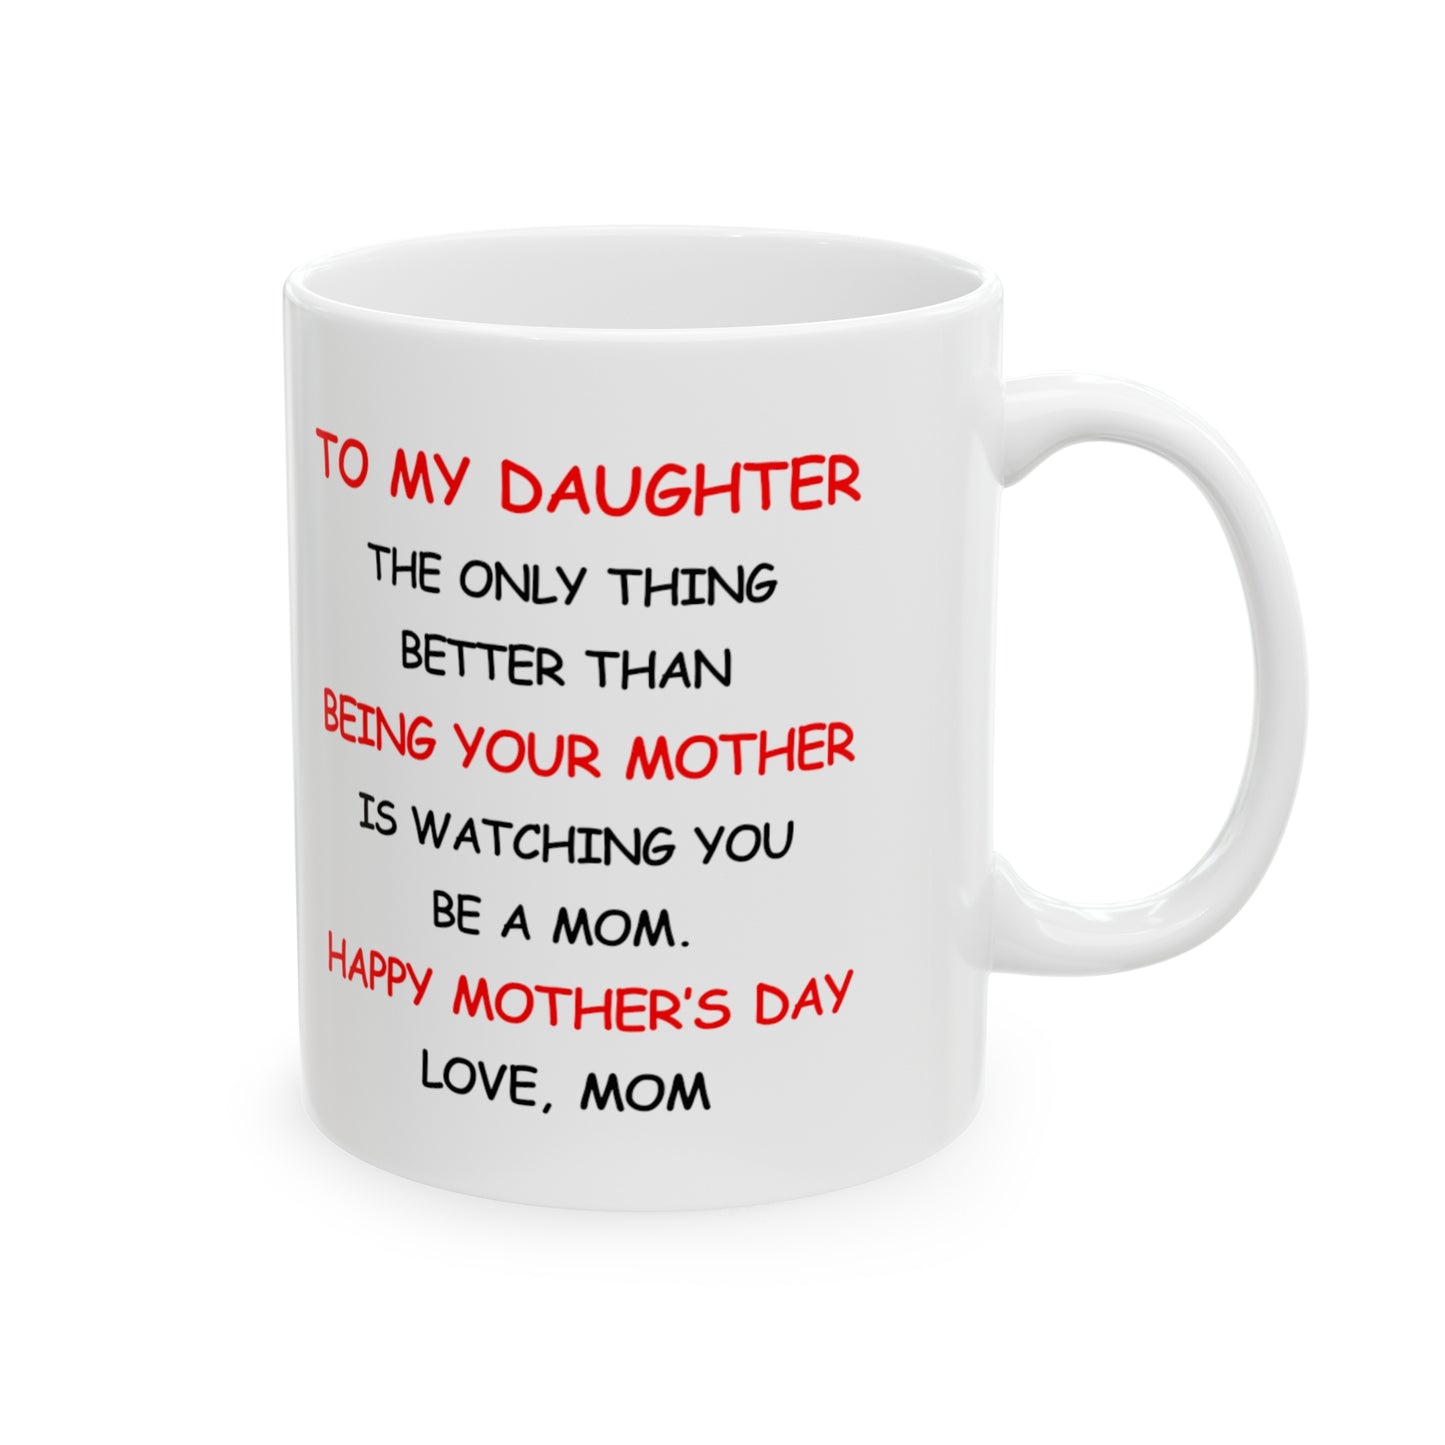 To My Daughter - Love, Mom Ceramic Mug, 11oz